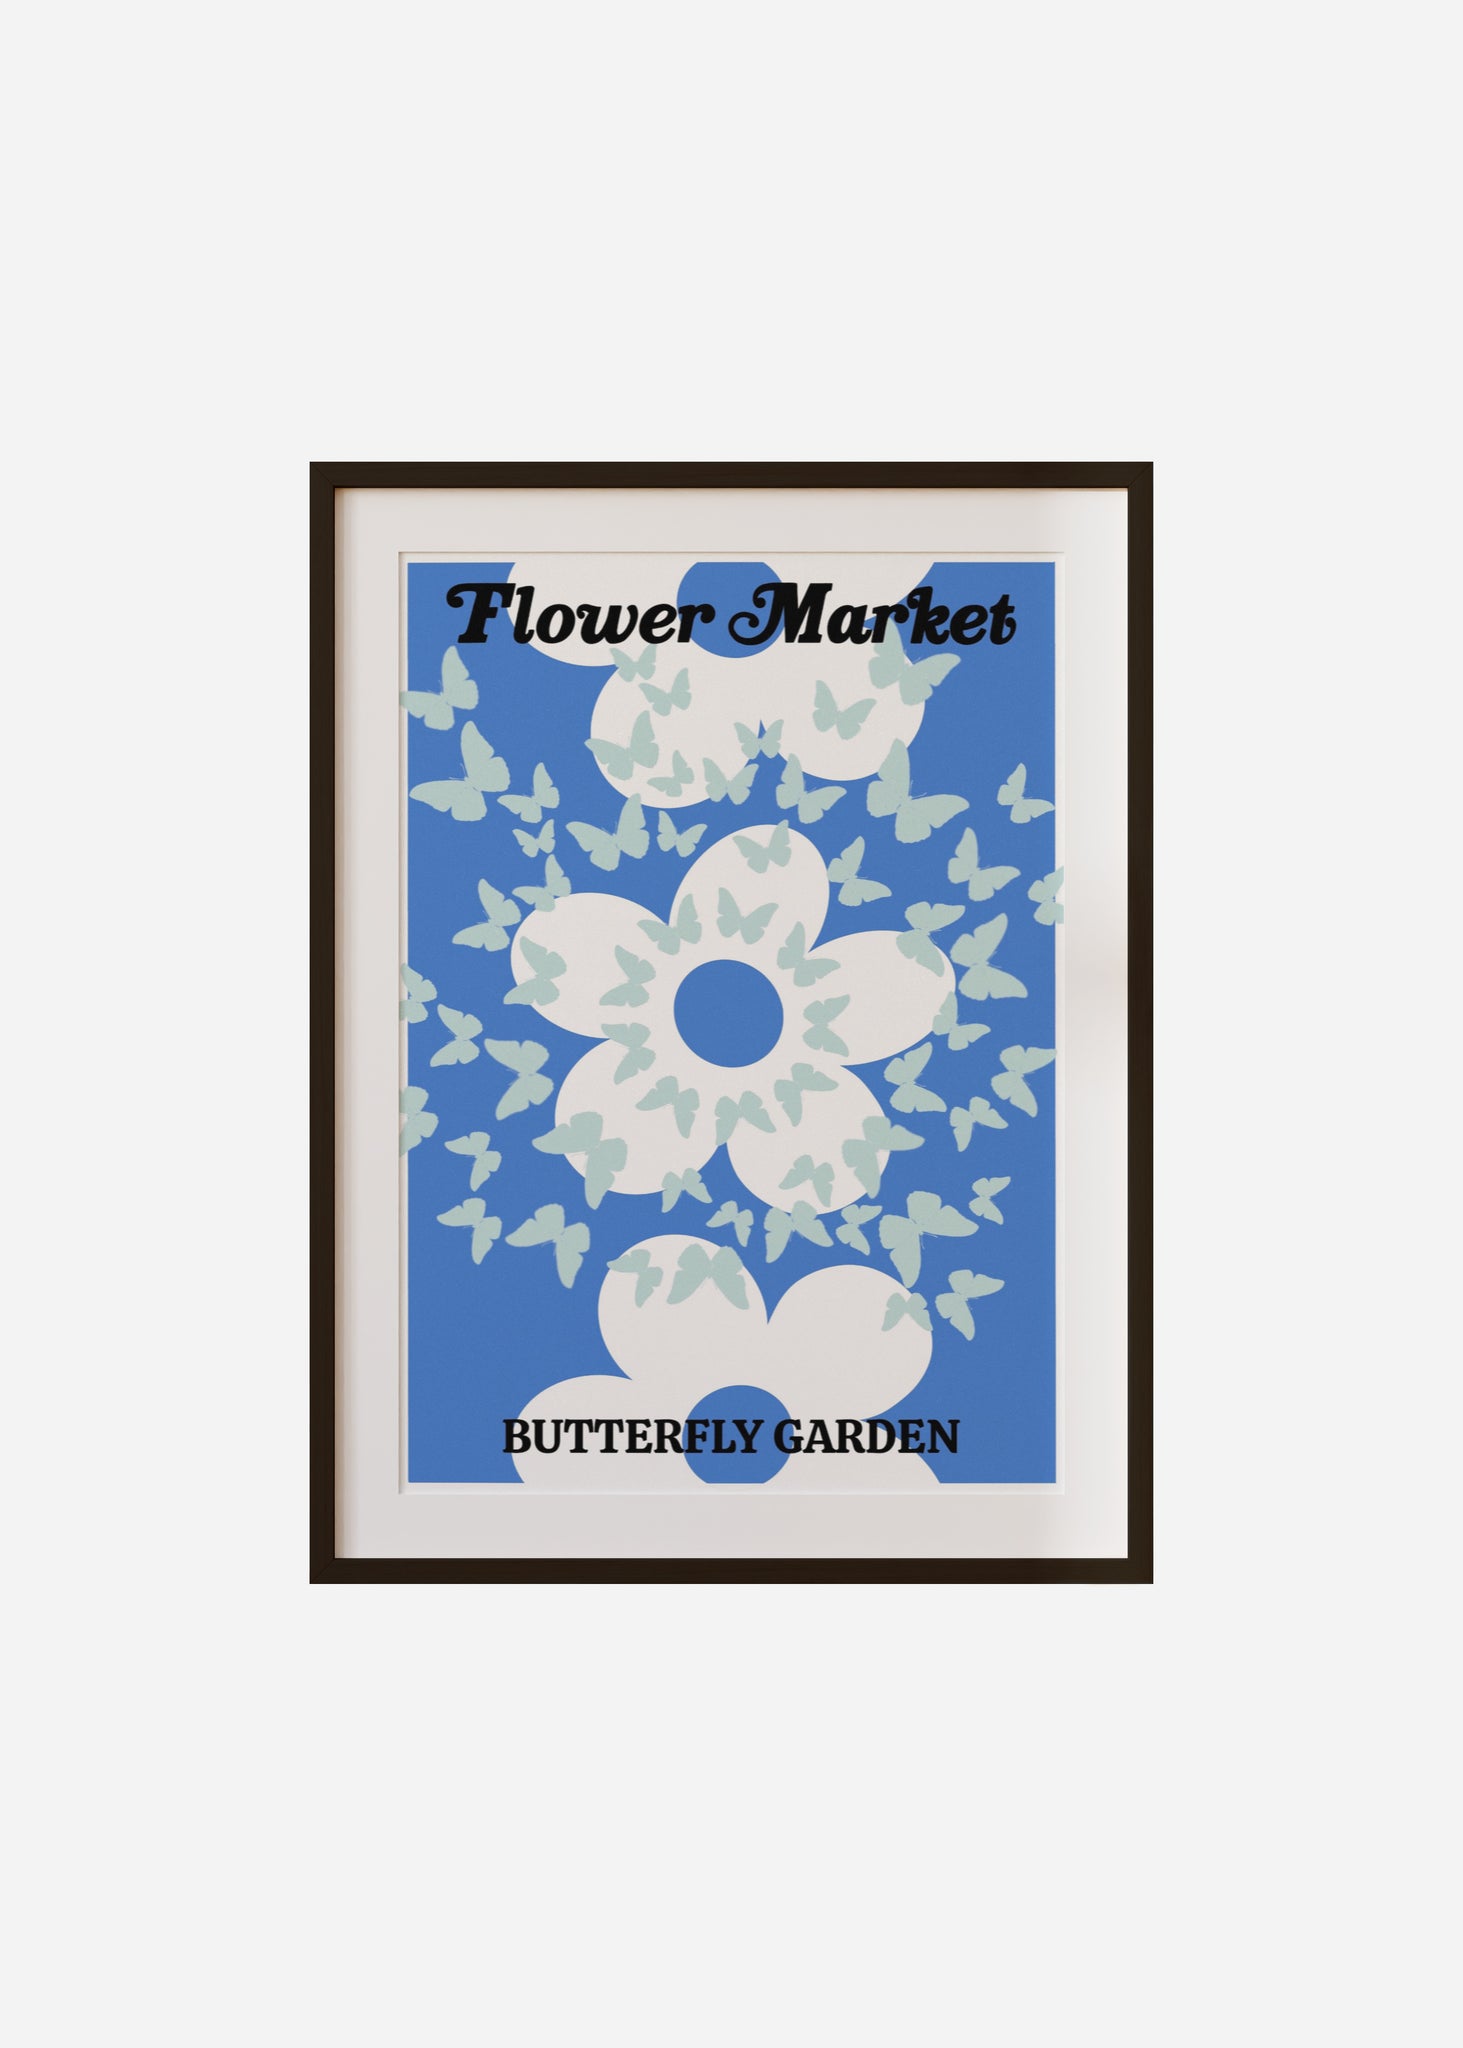 flower market / butterfly garden Framed & Mounted Print